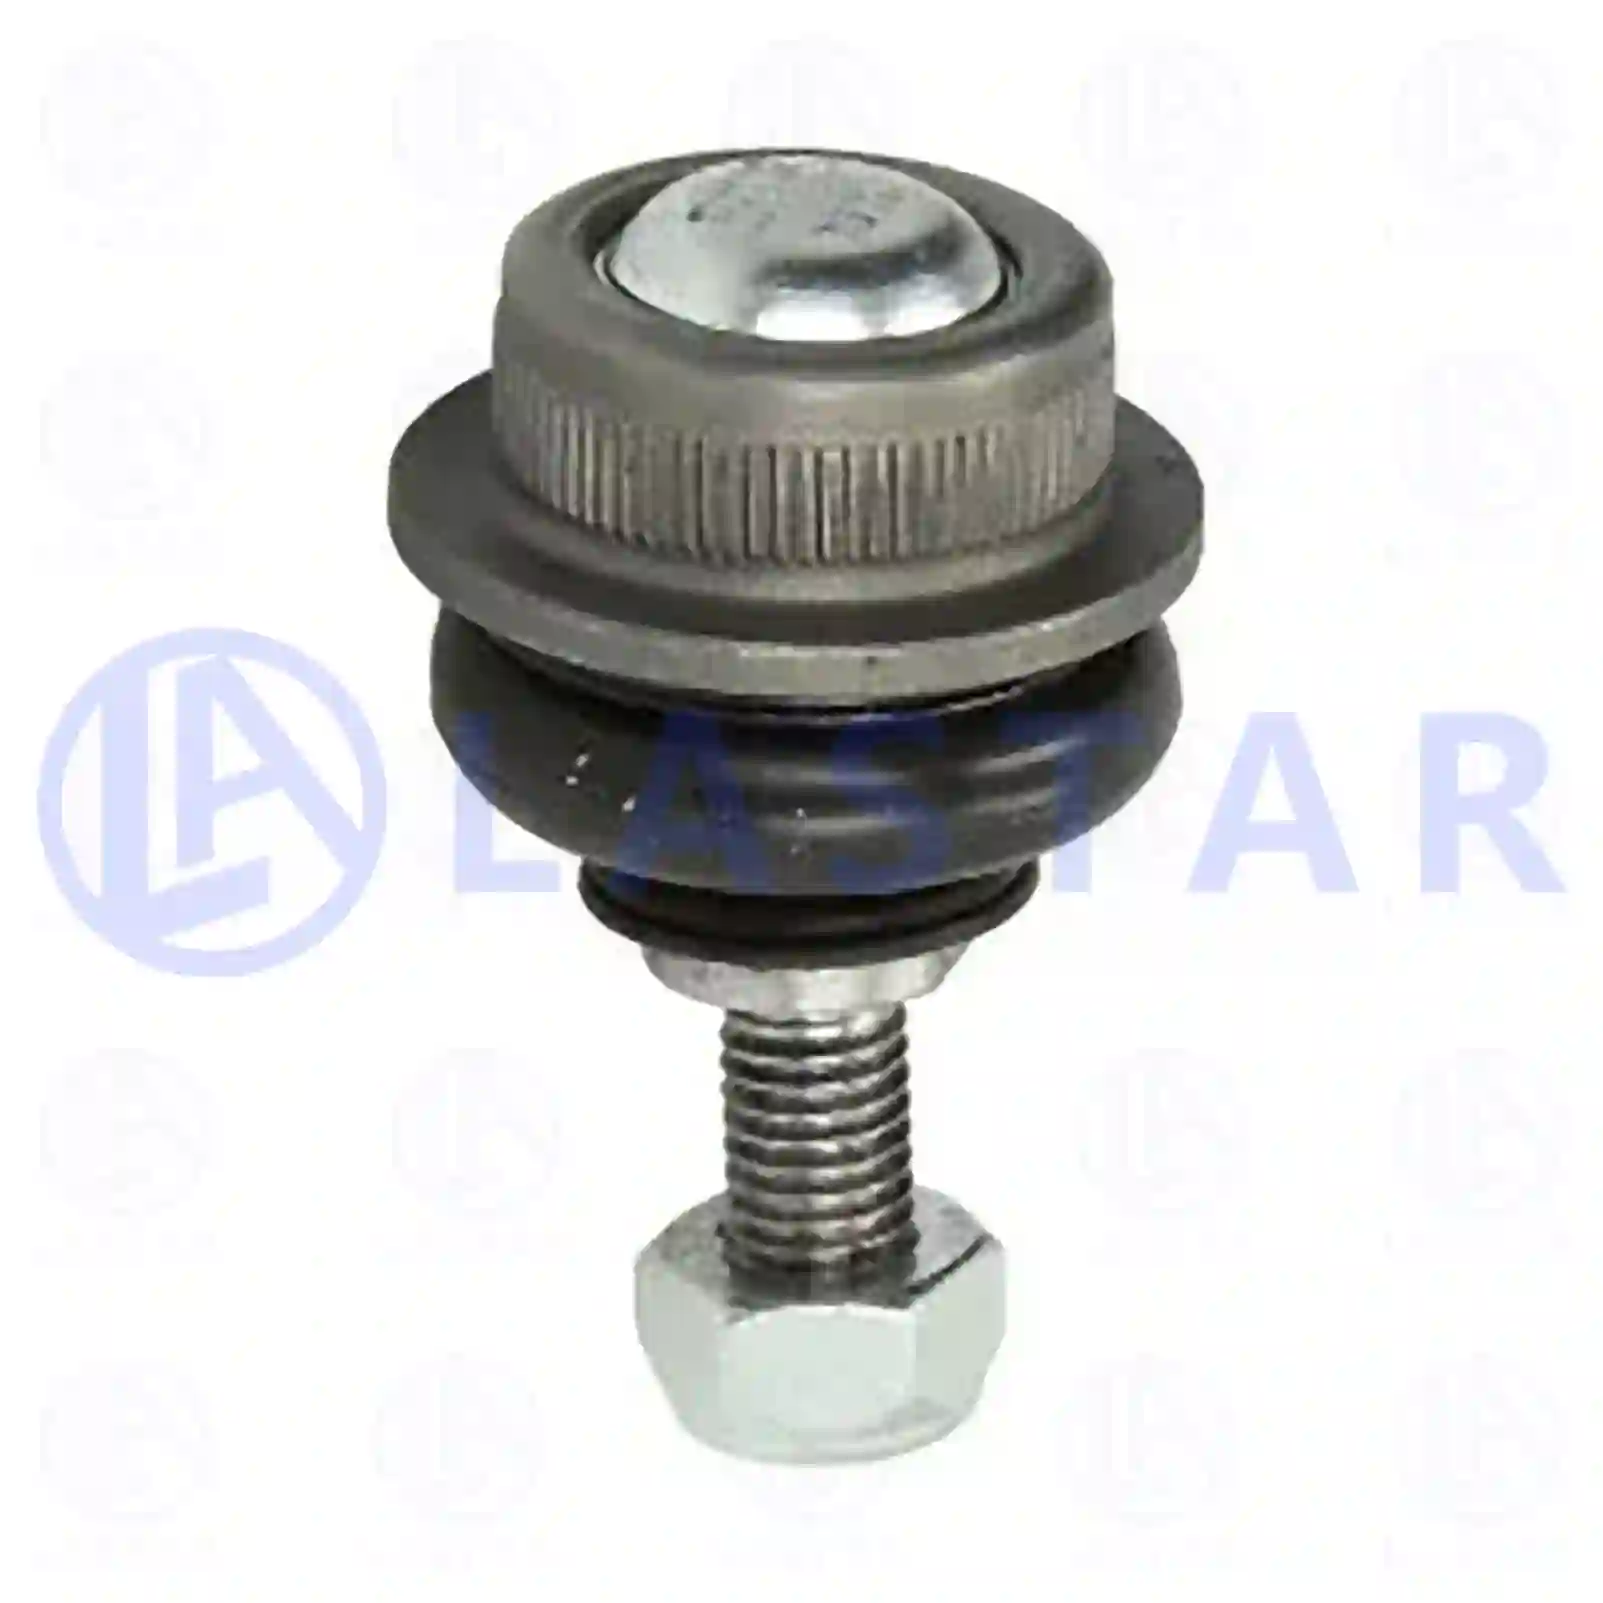 Gear Shift Lever Ball joint, la no: 77733265 ,  oem no:1330987 Lastar Spare Part | Truck Spare Parts, Auotomotive Spare Parts